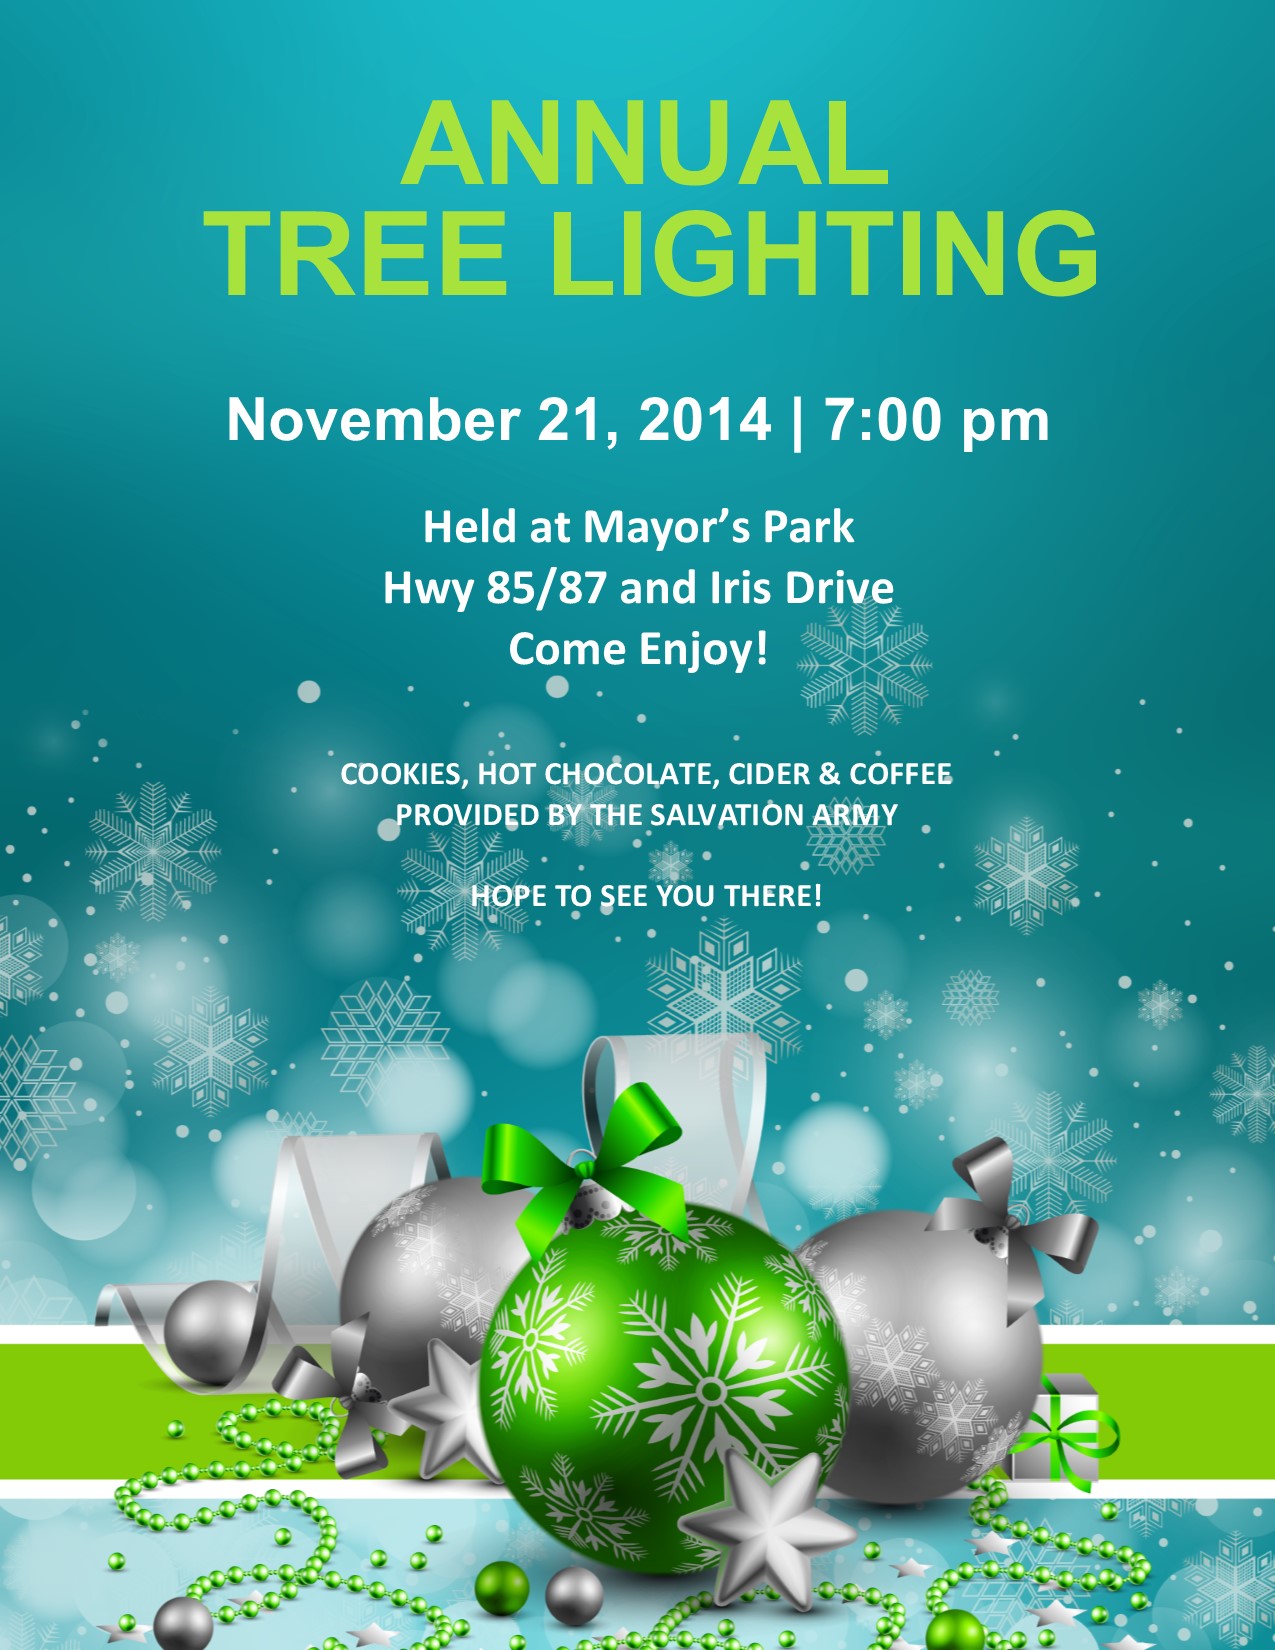 Tree Lighting Ceremony at Mayors Park